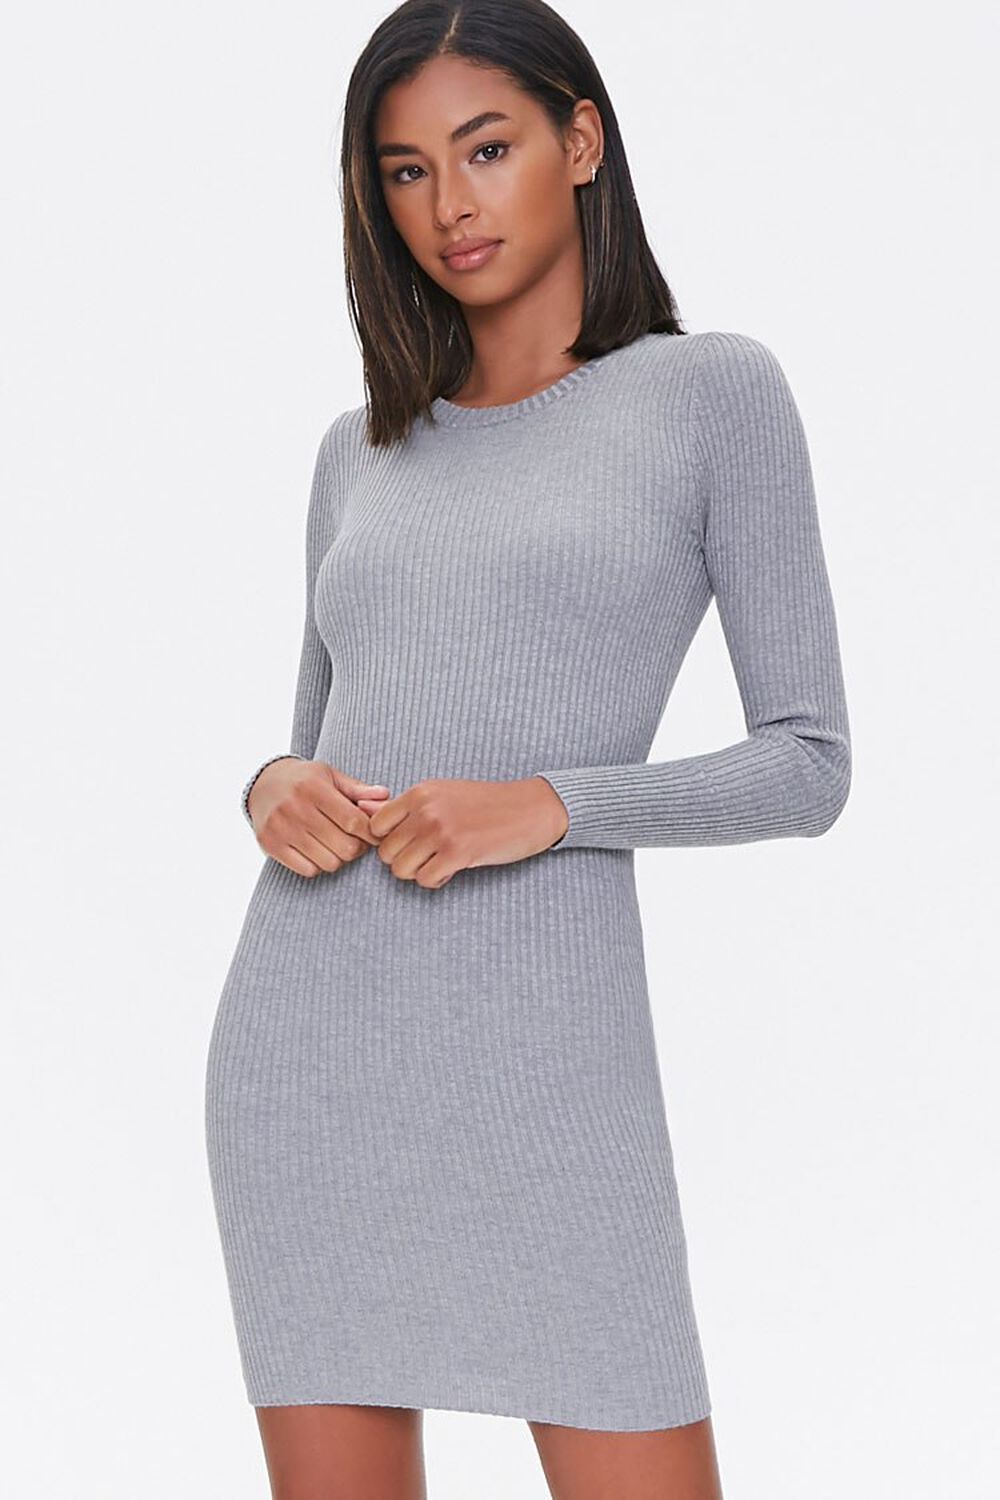 HEATHER GREY Sweater-Knit Mini Dress, image 1